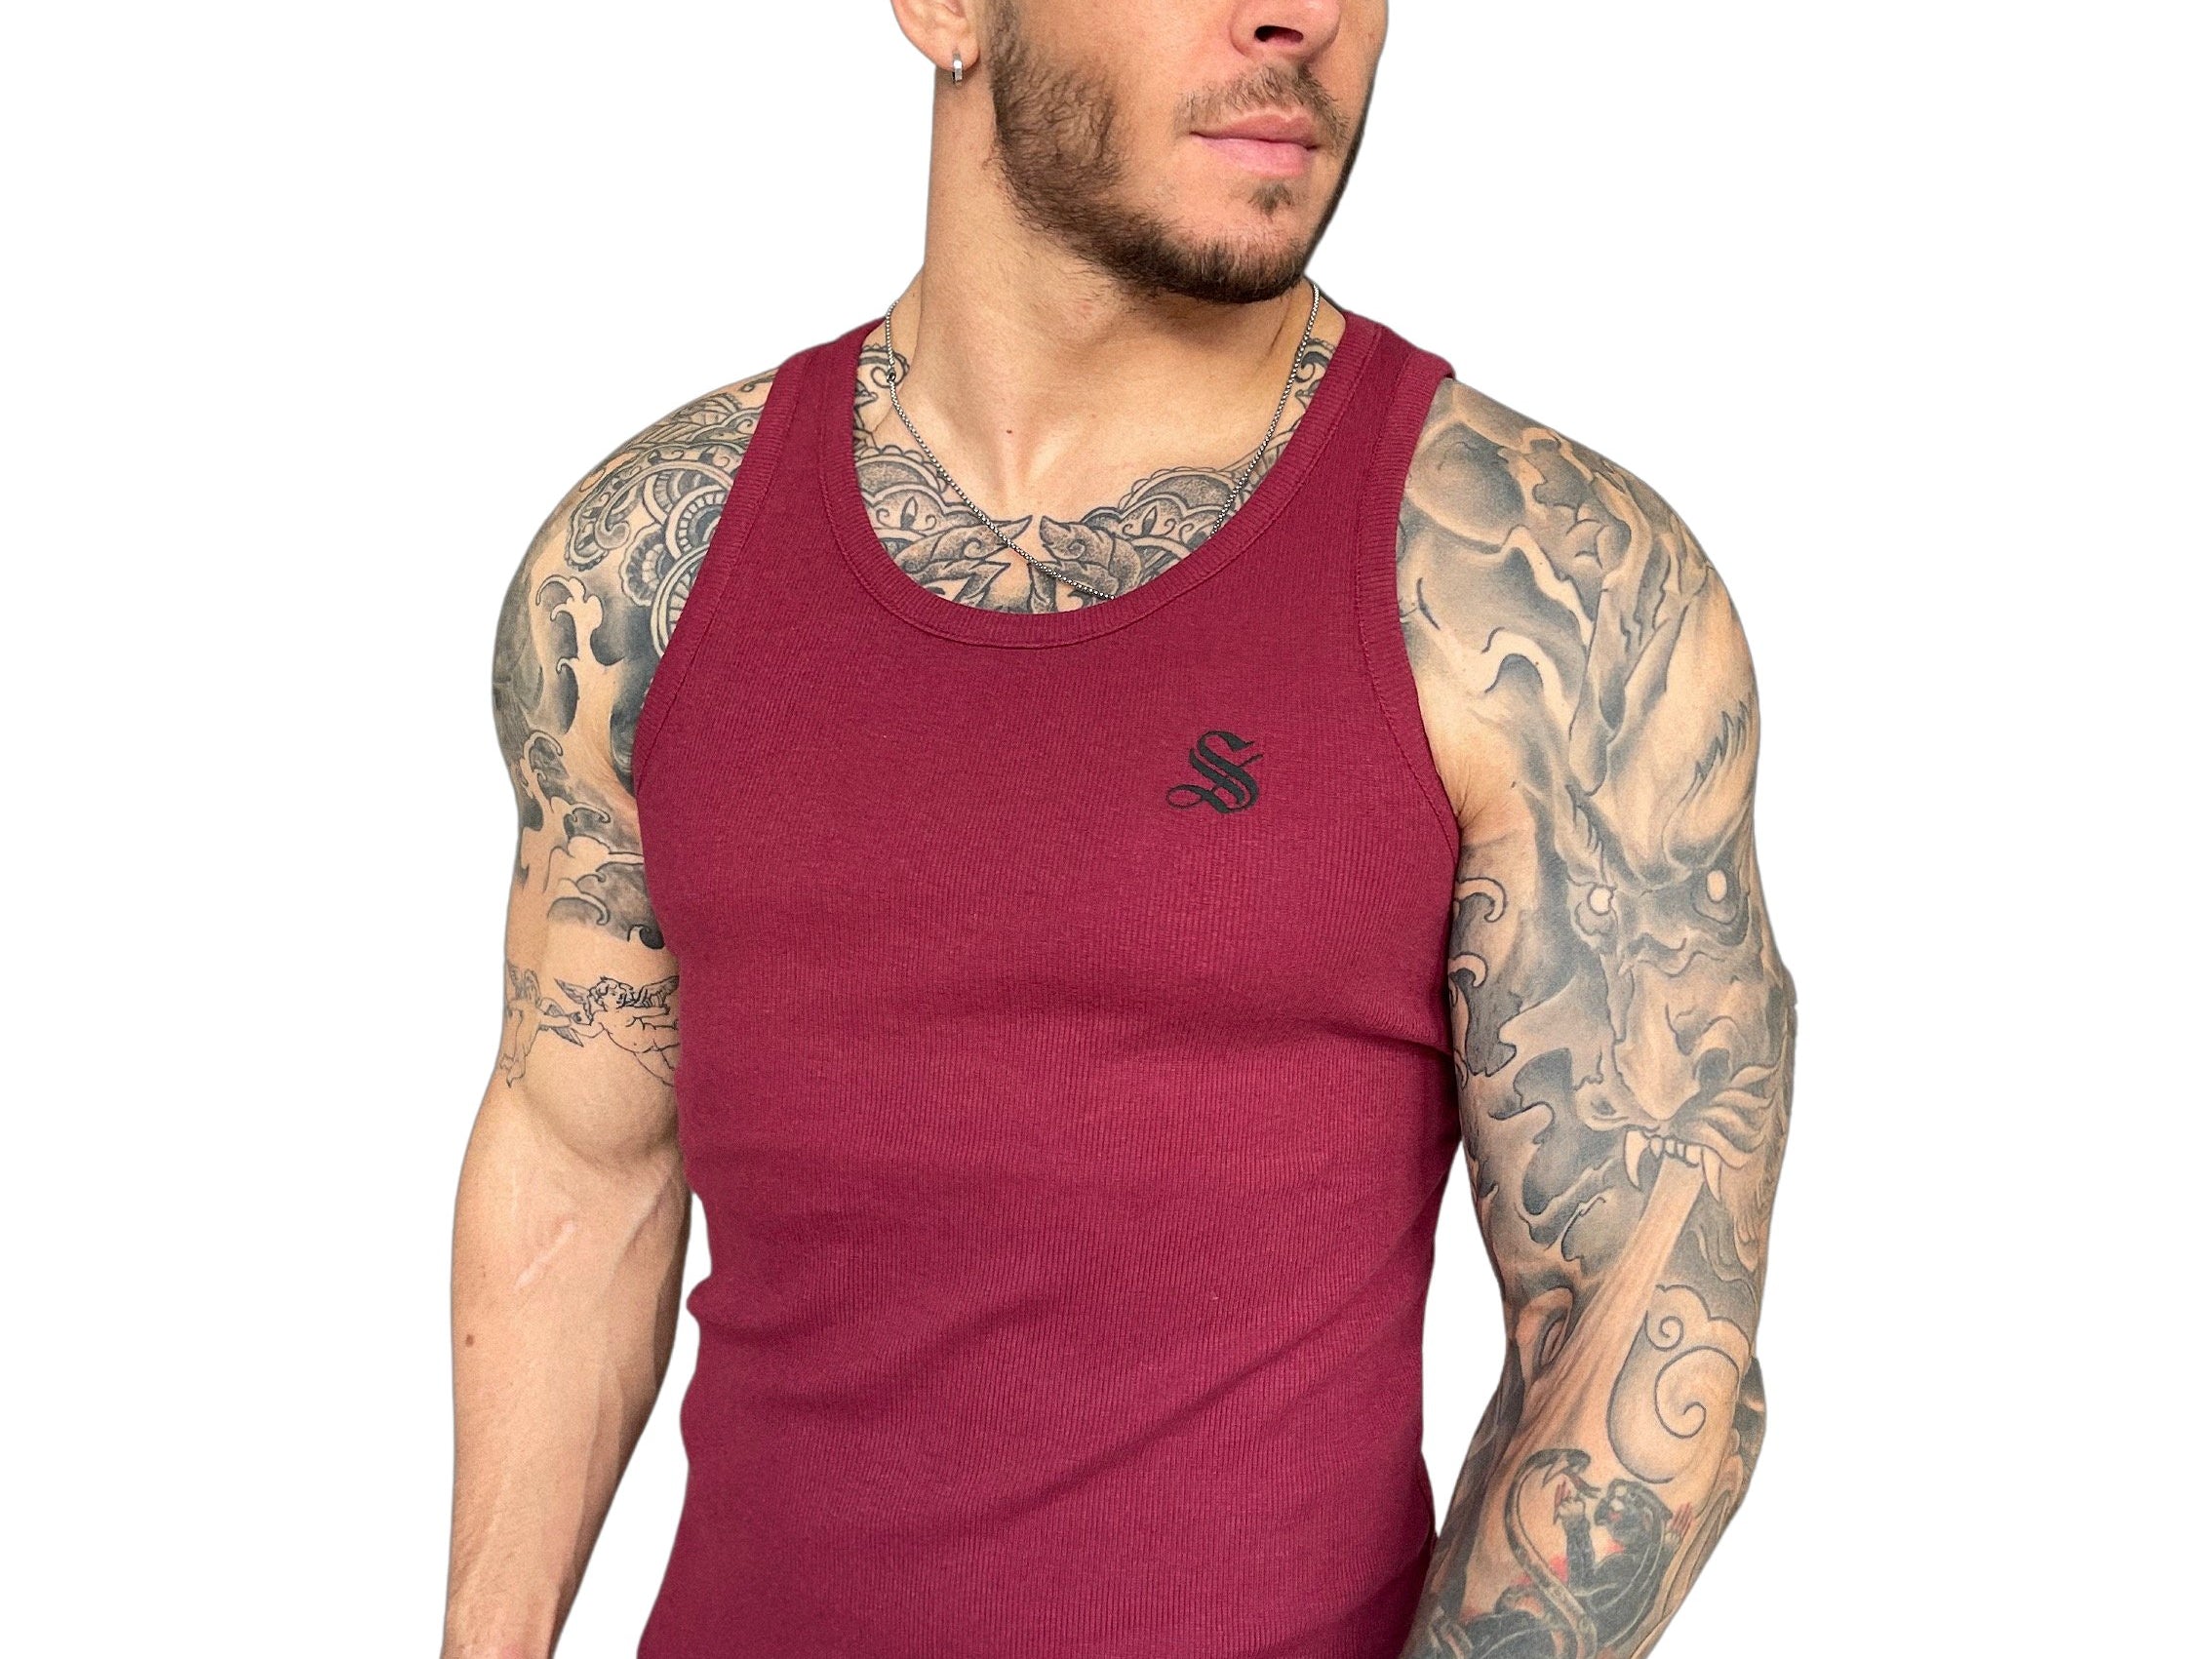 Burdona - Red Tank Top for Men - Sarman Fashion - Wholesale Clothing Fashion Brand for Men from Canada